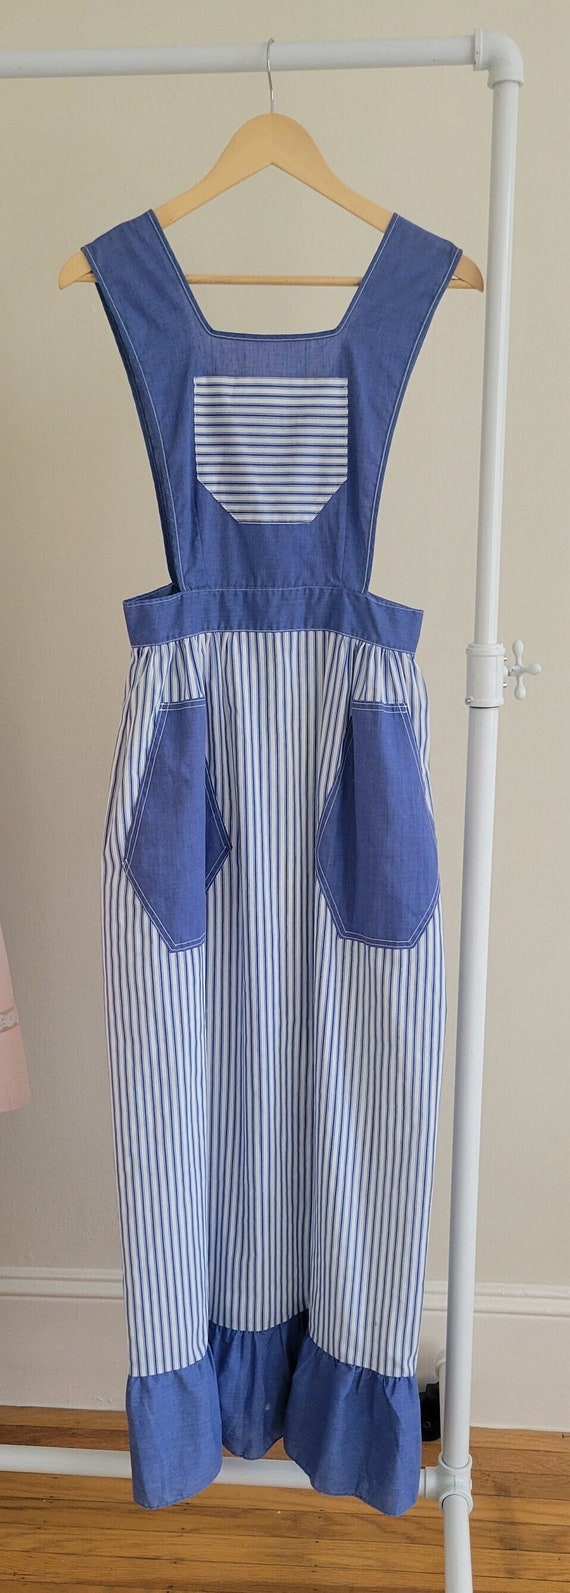 70s Blue Apron Dress w/Pockets